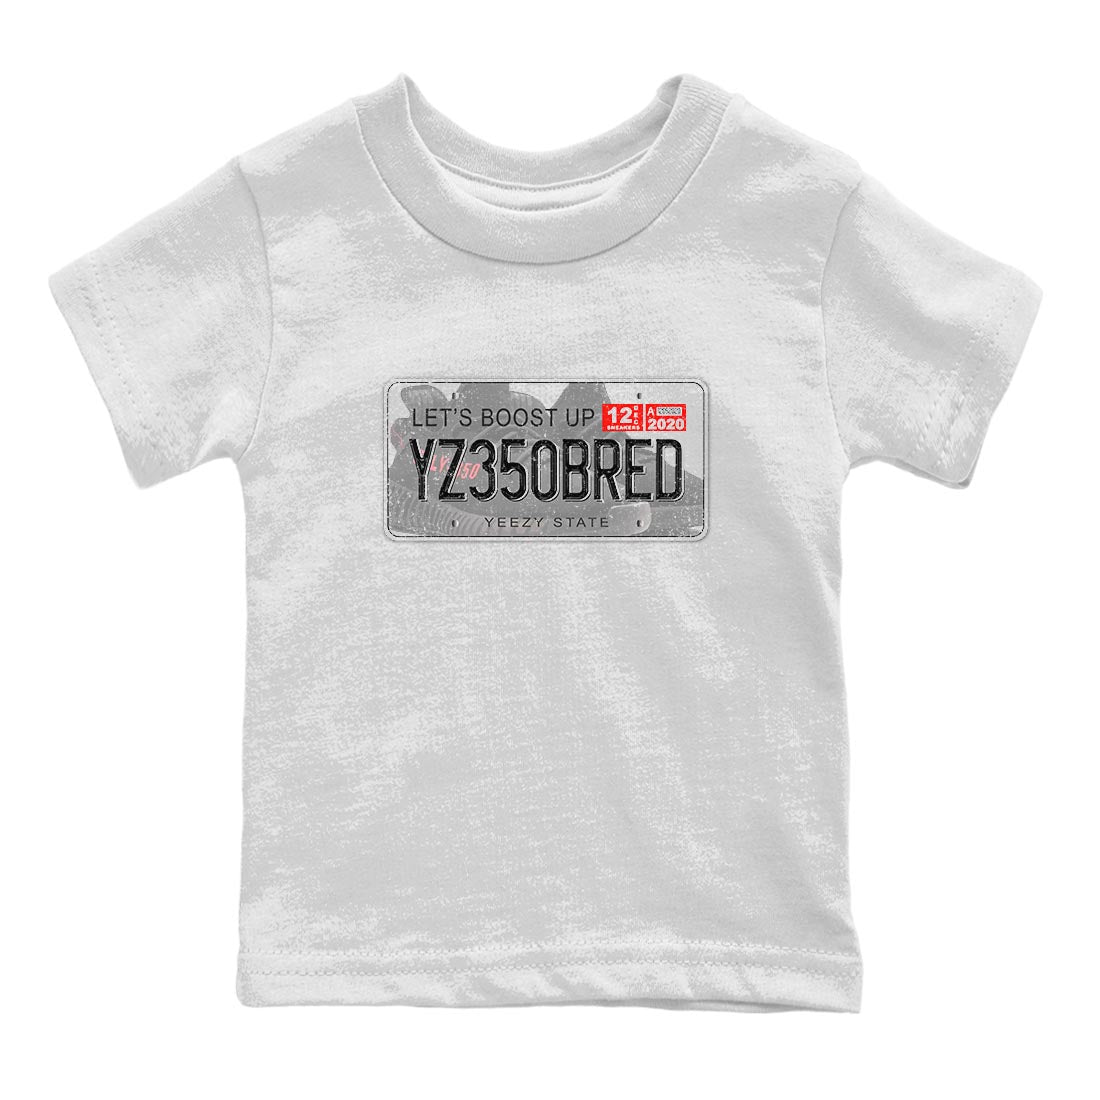 Yeezy 350 Bred shirt to match jordans Yeezy Plate Streetwear Sneaker Shirt Yeezy Boost 350 V2 Bred Drip Gear Zone Sneaker Matching Clothing Baby Toddler White 2 T-Shirt